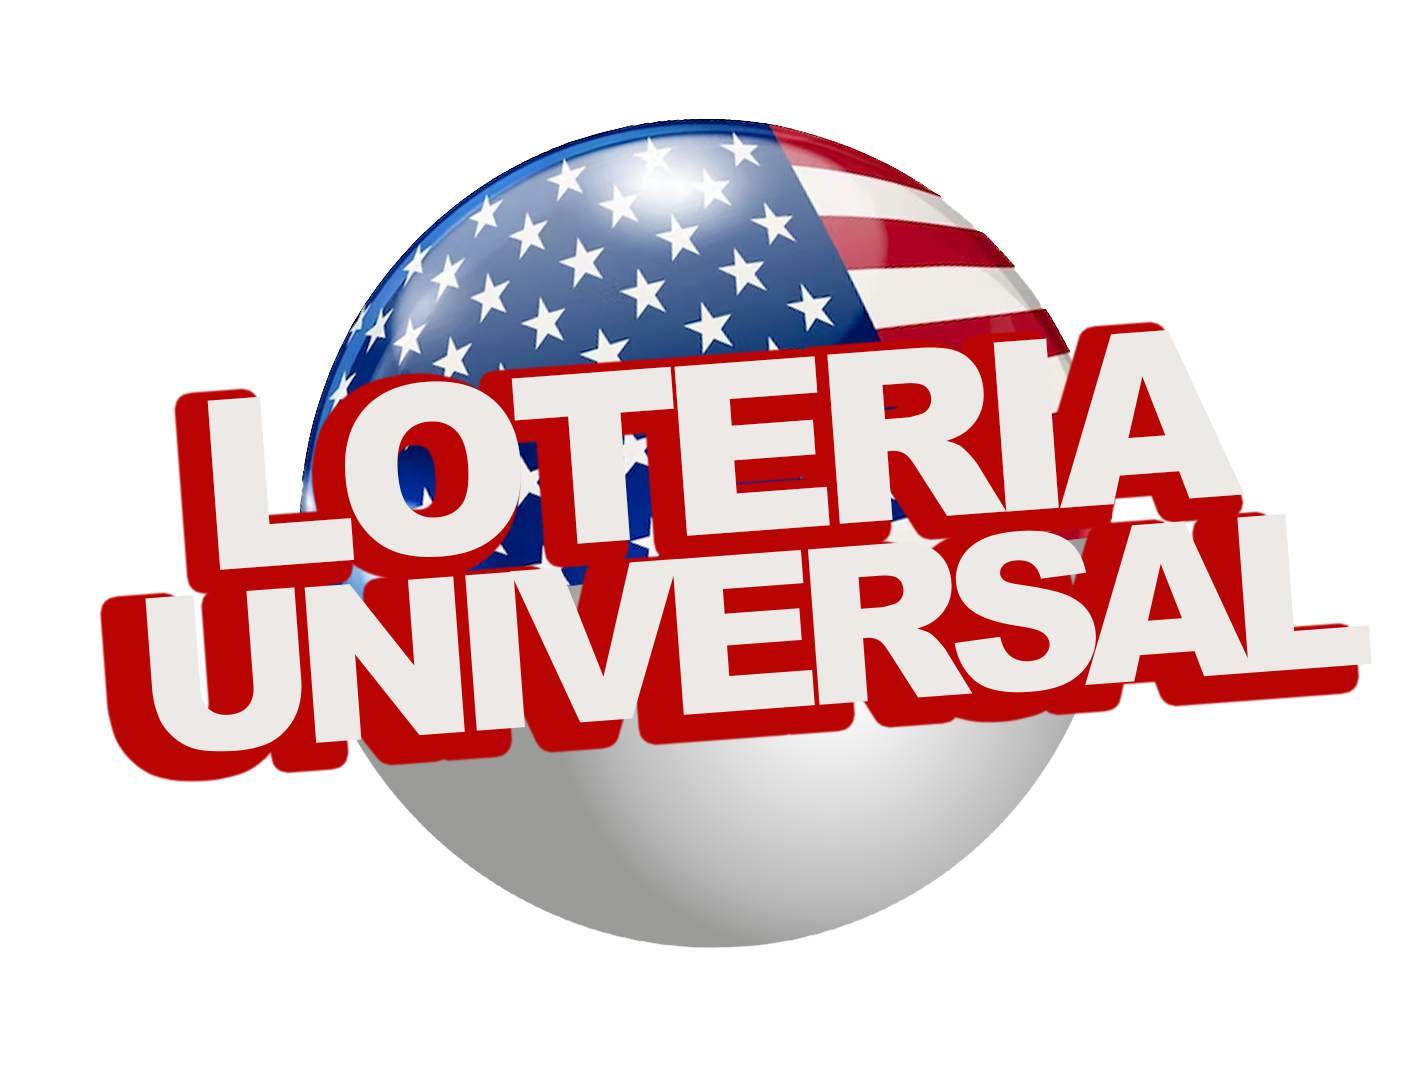 Loteria Mundial